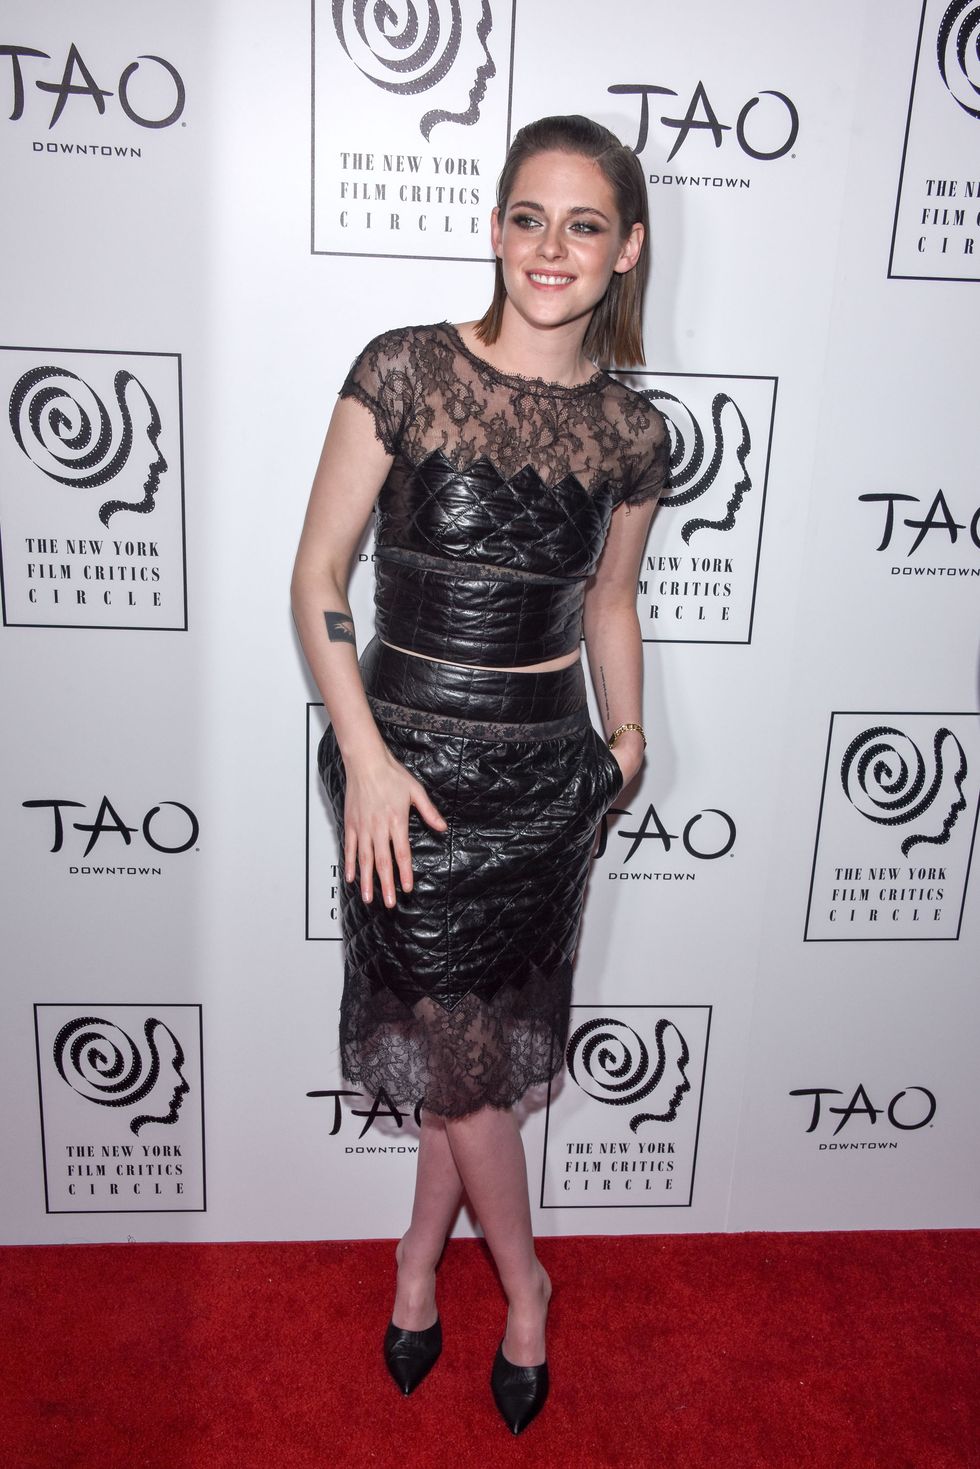 Kristen Stewart at the New York Film Critics Circle Awards